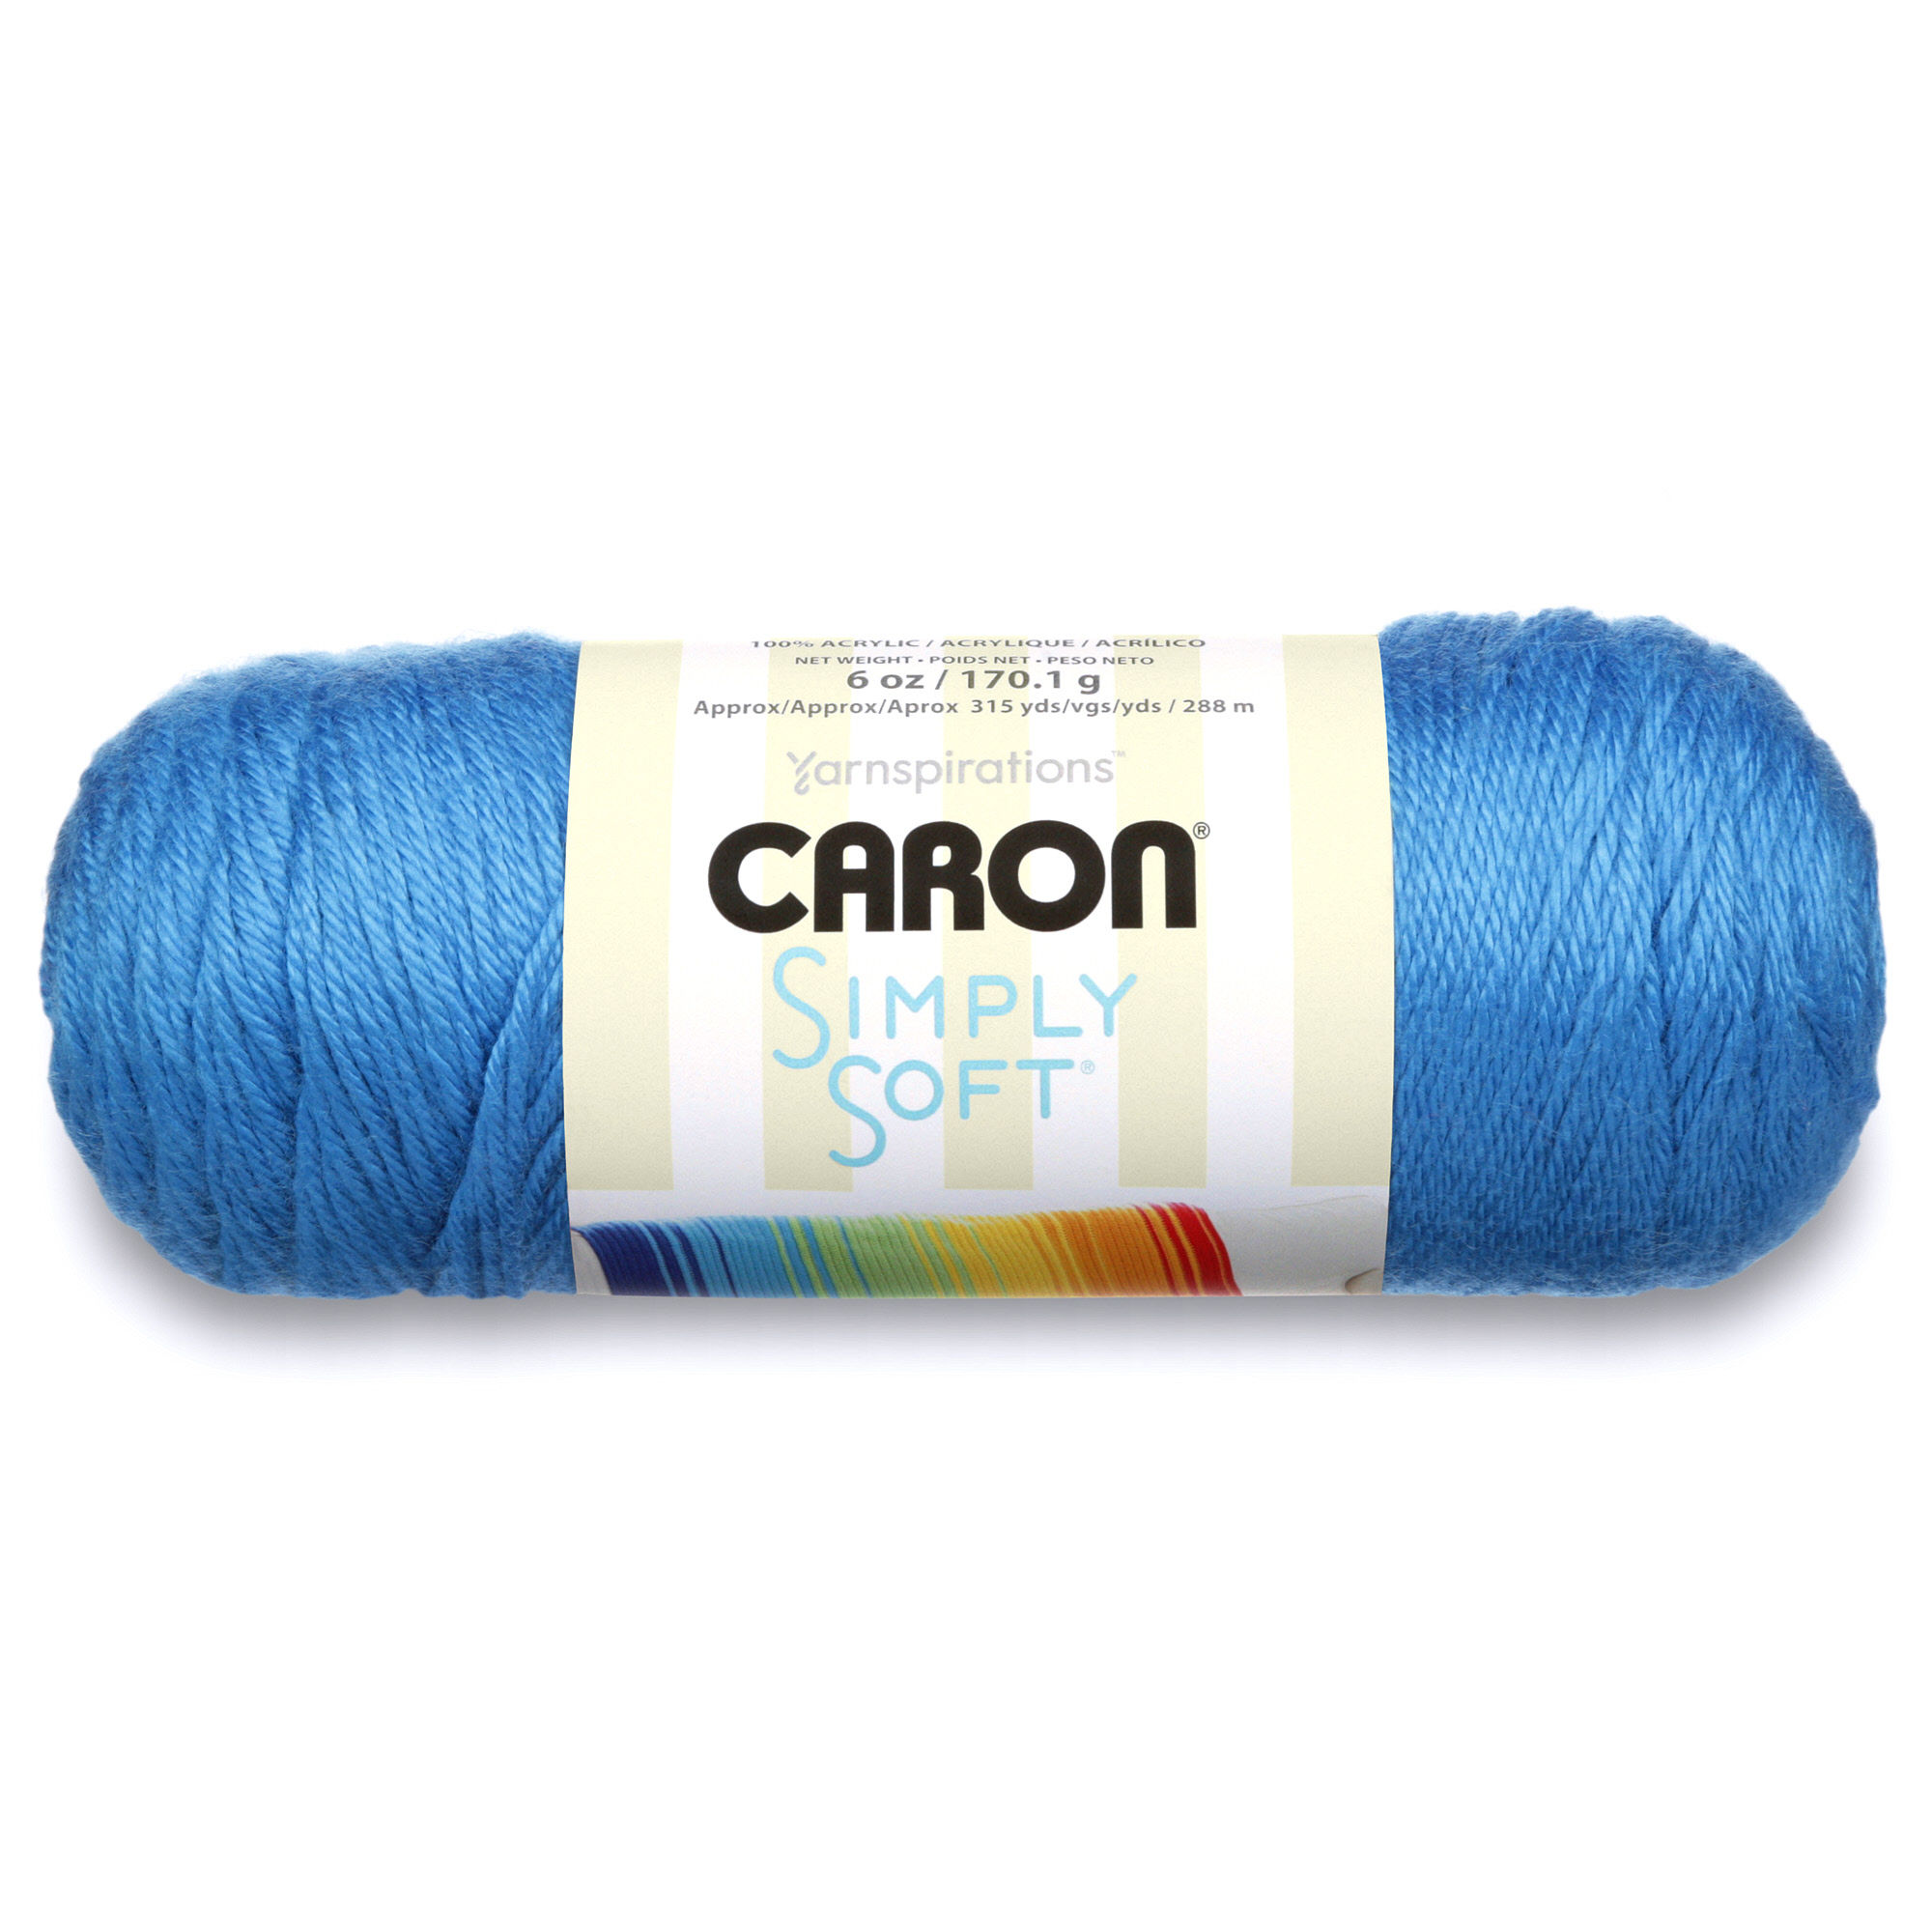 Caron® Simply Soft® #4 Medium Acrylic Yarn, Cobalt Blue 6oz/170g, 315 Yards - image 1 of 2